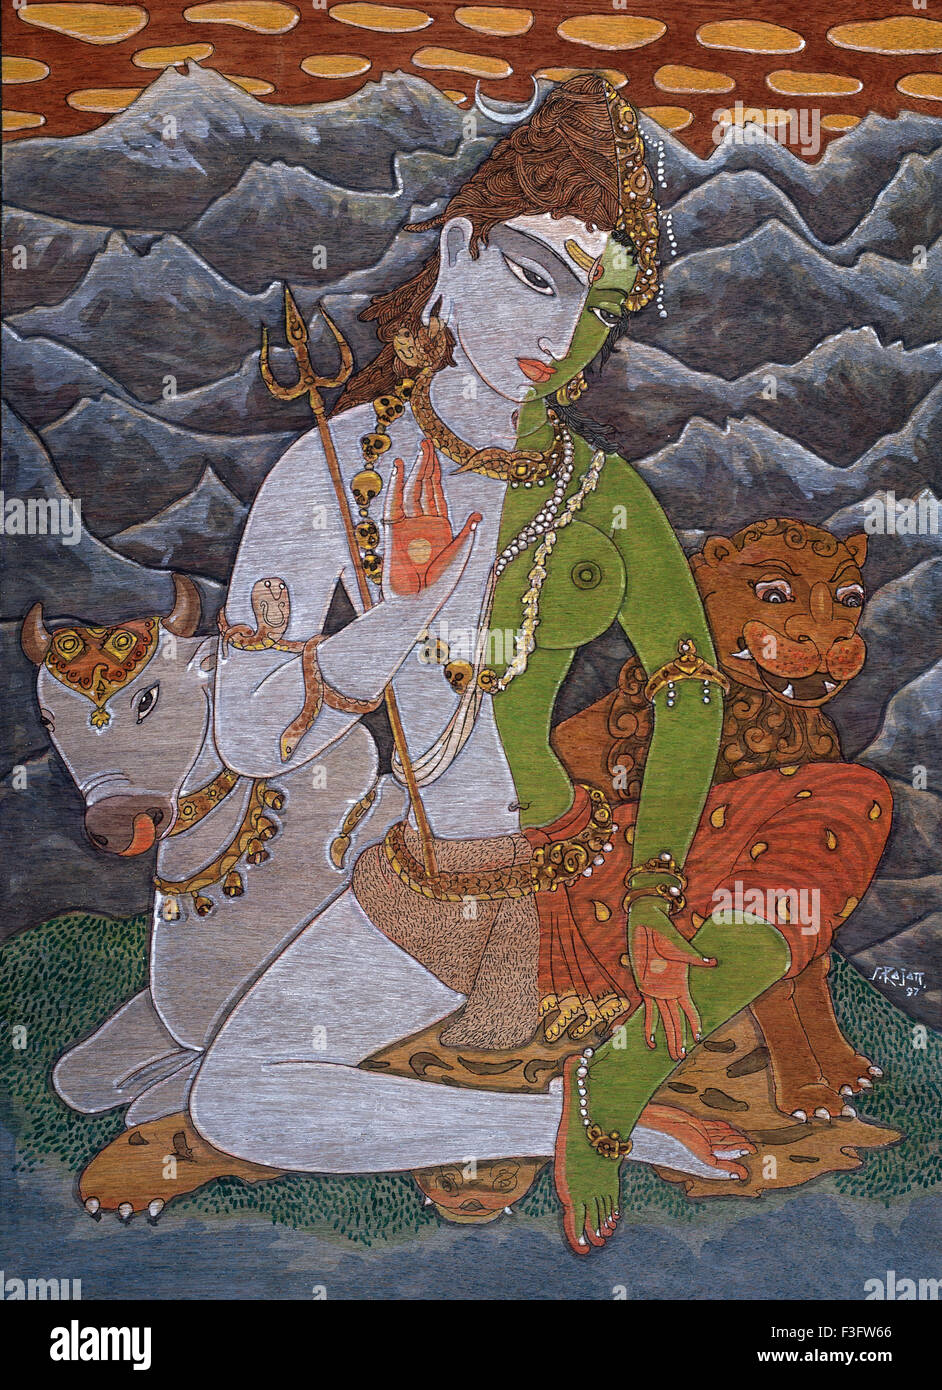 Ardhanarishvara Hindu deity Shiva combined with his consort ...